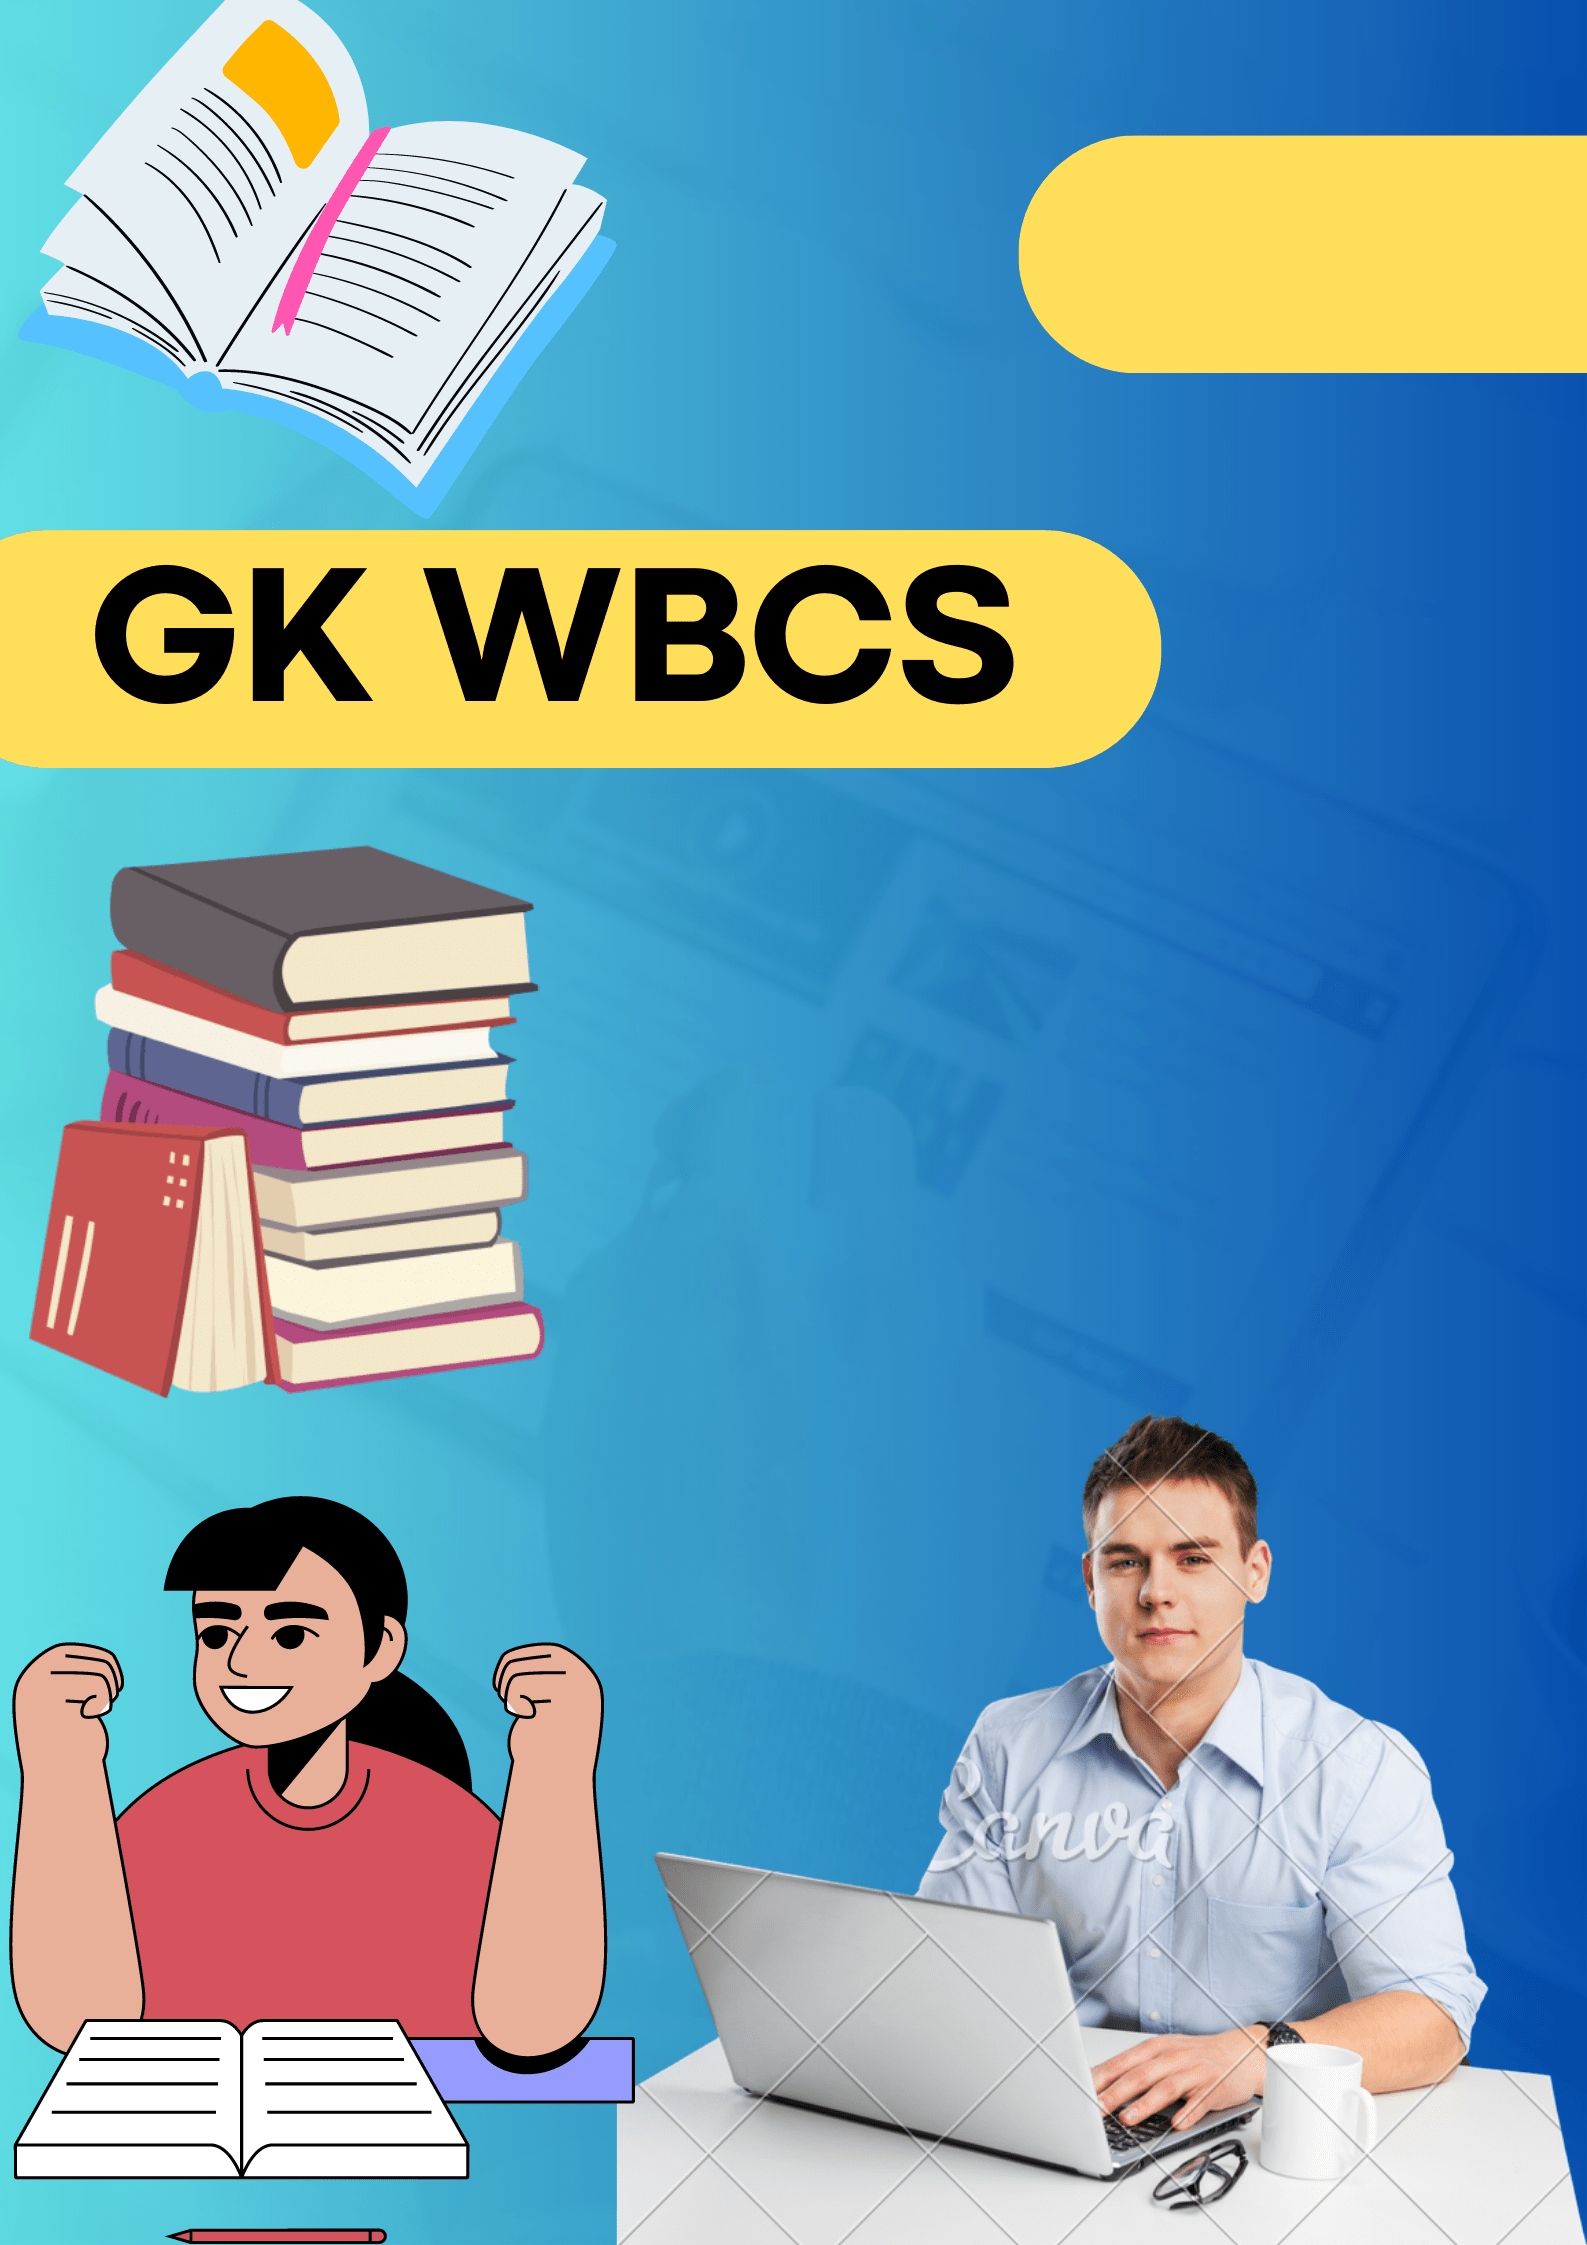 GK WBCS